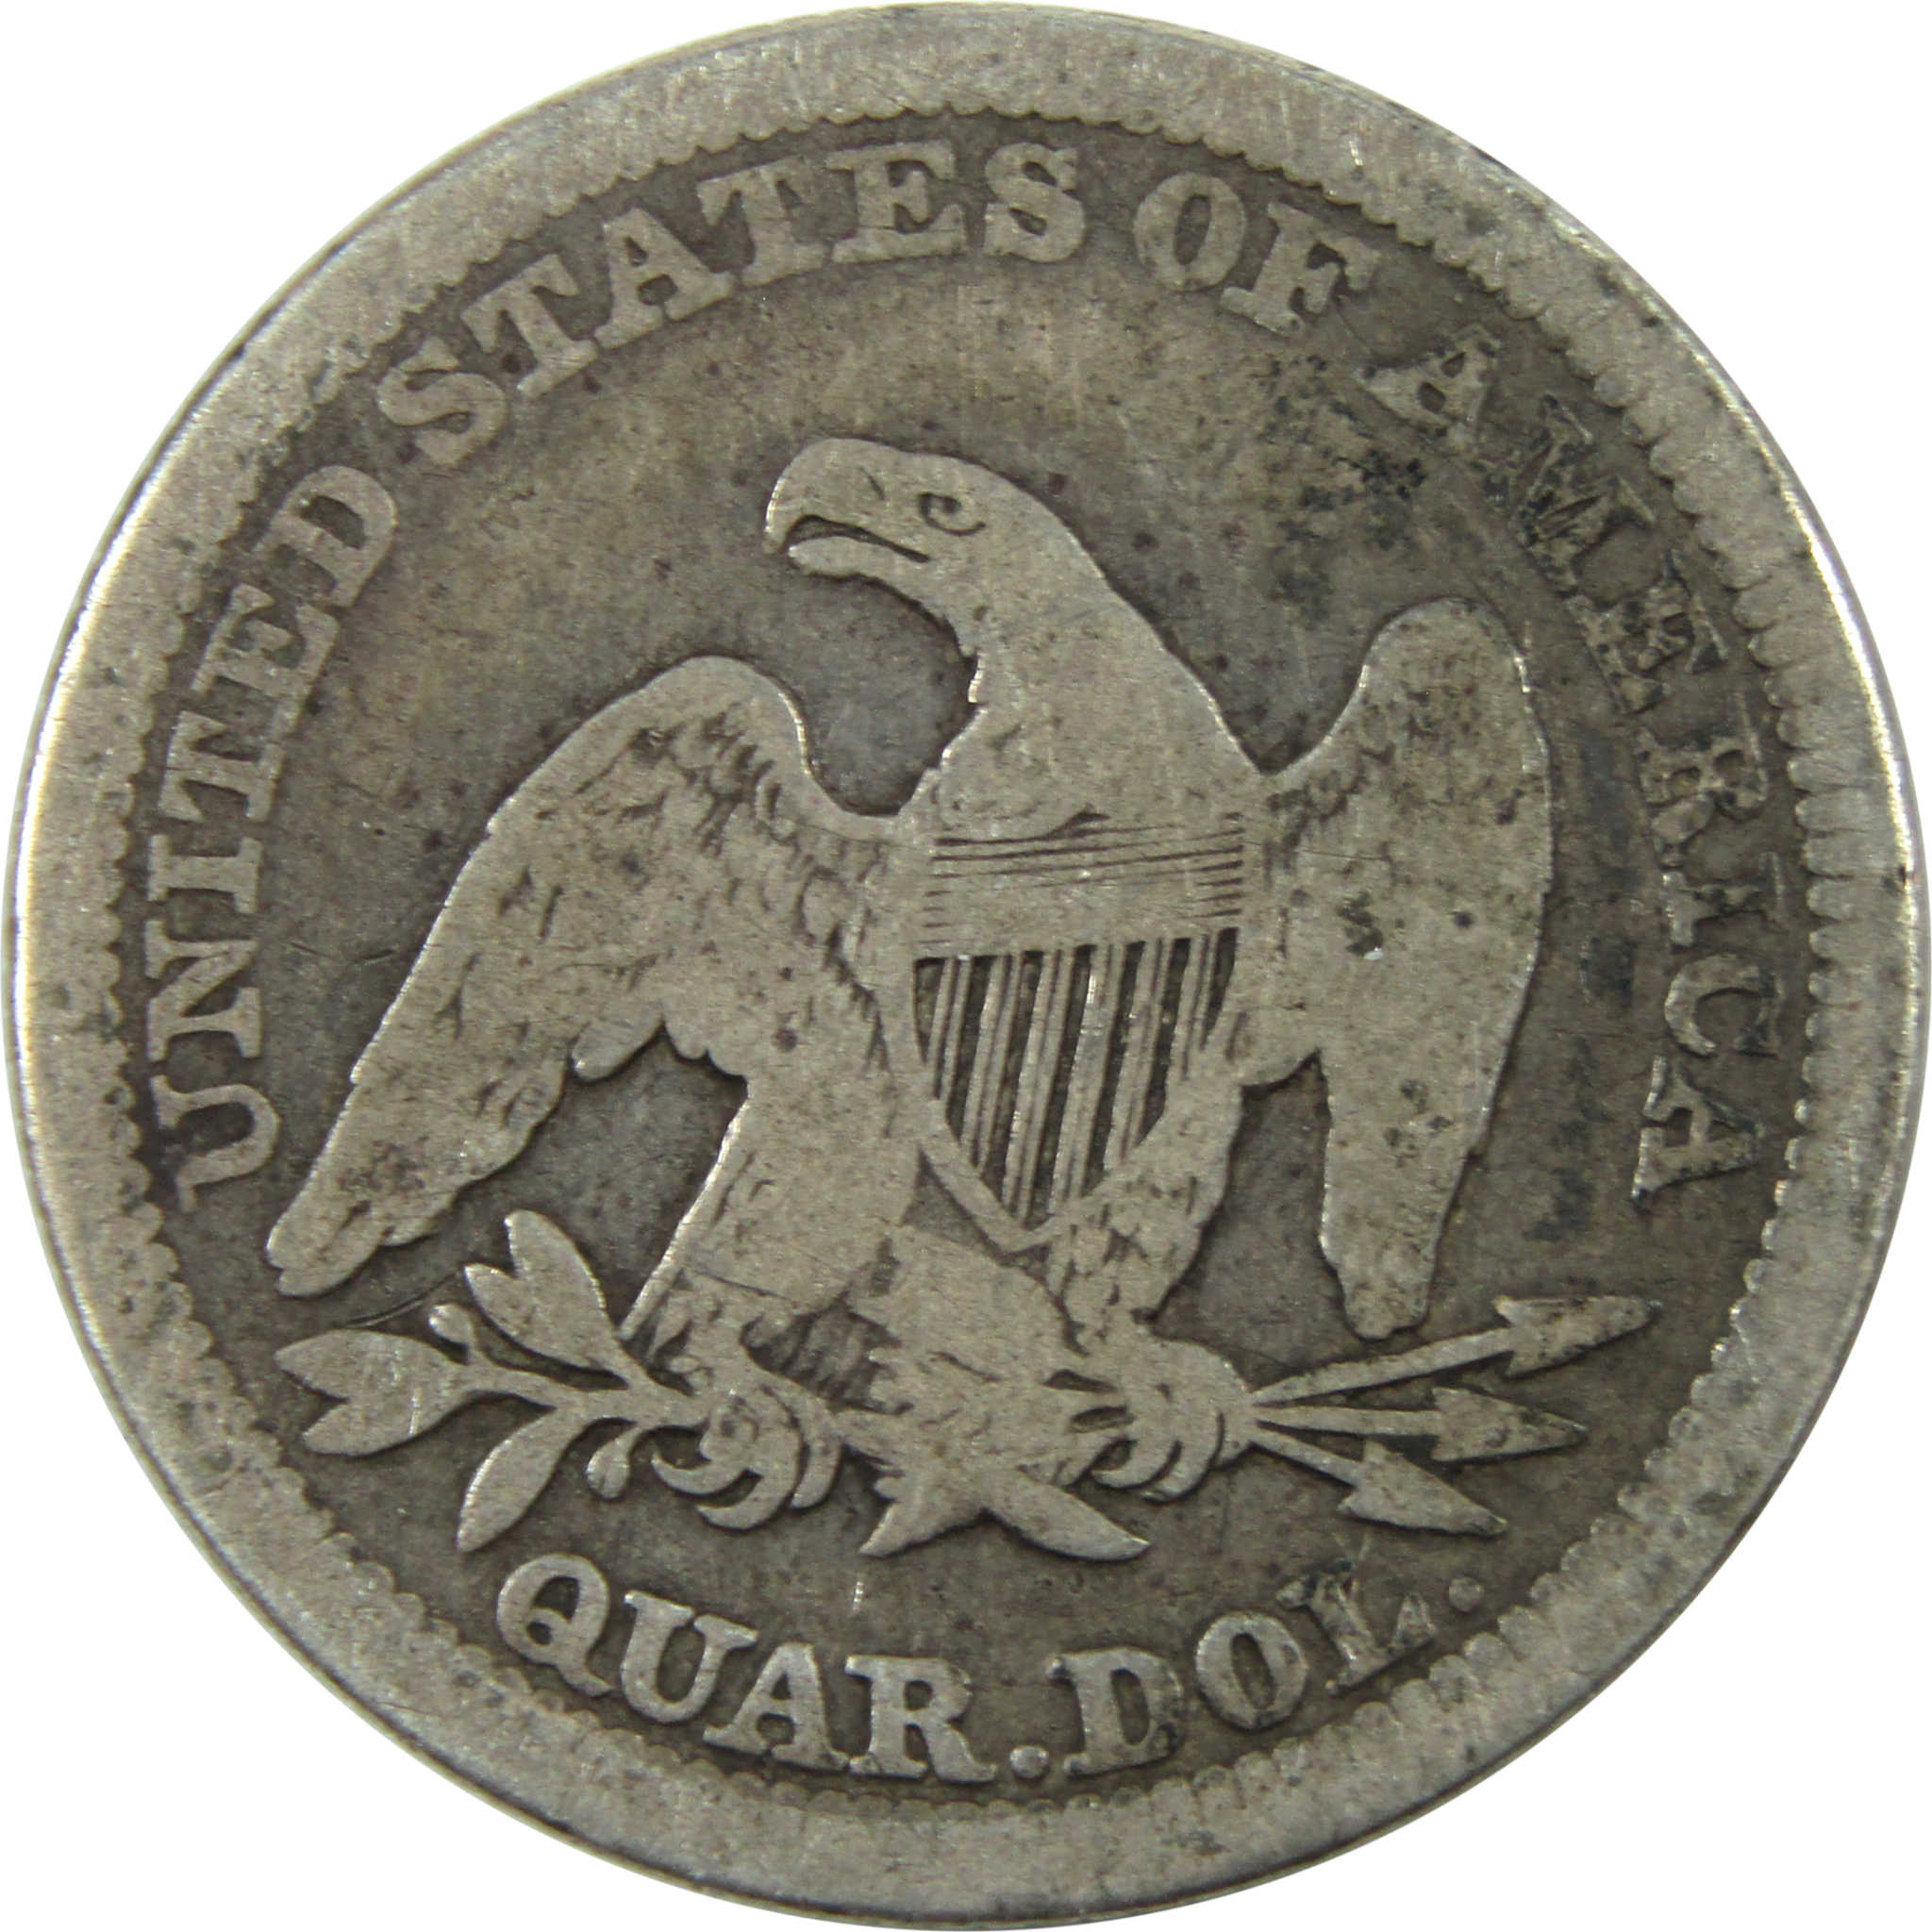 1858 Seated Liberty Quarter F Fine Silver 25c Coin SKU:I13321